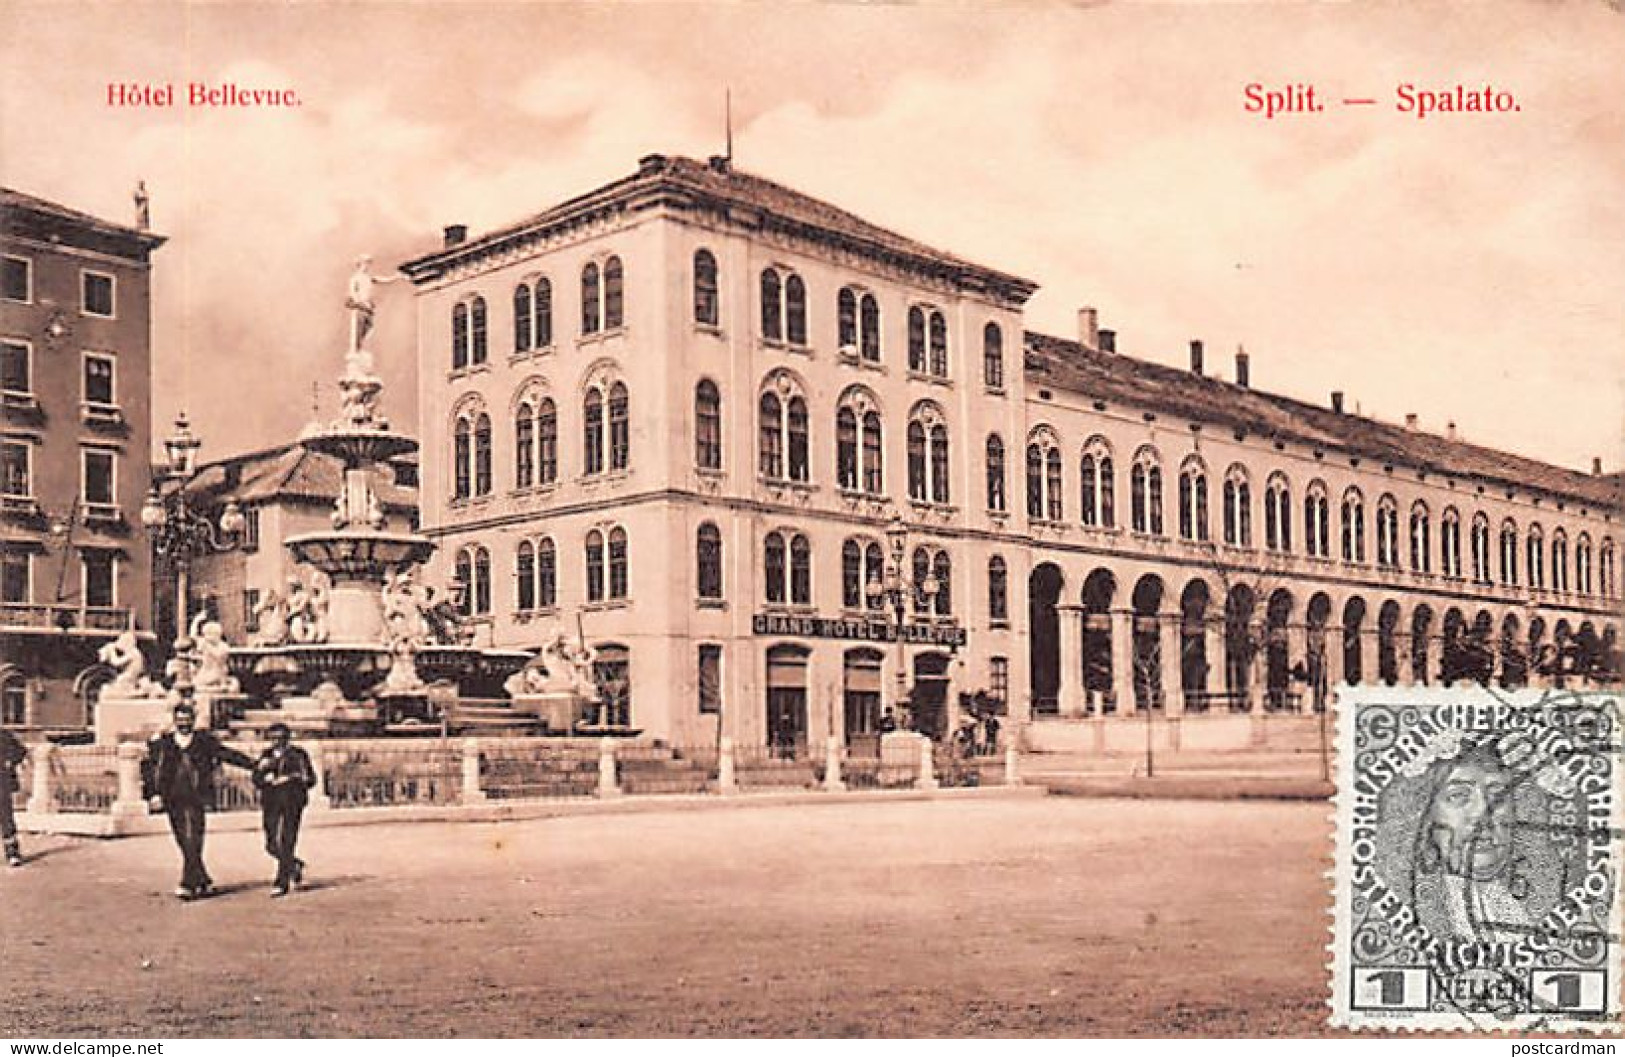 Croatia - SPLIT Spalato - Hôtel Bellevue - Publ. G. A. Milisich  - Croatie